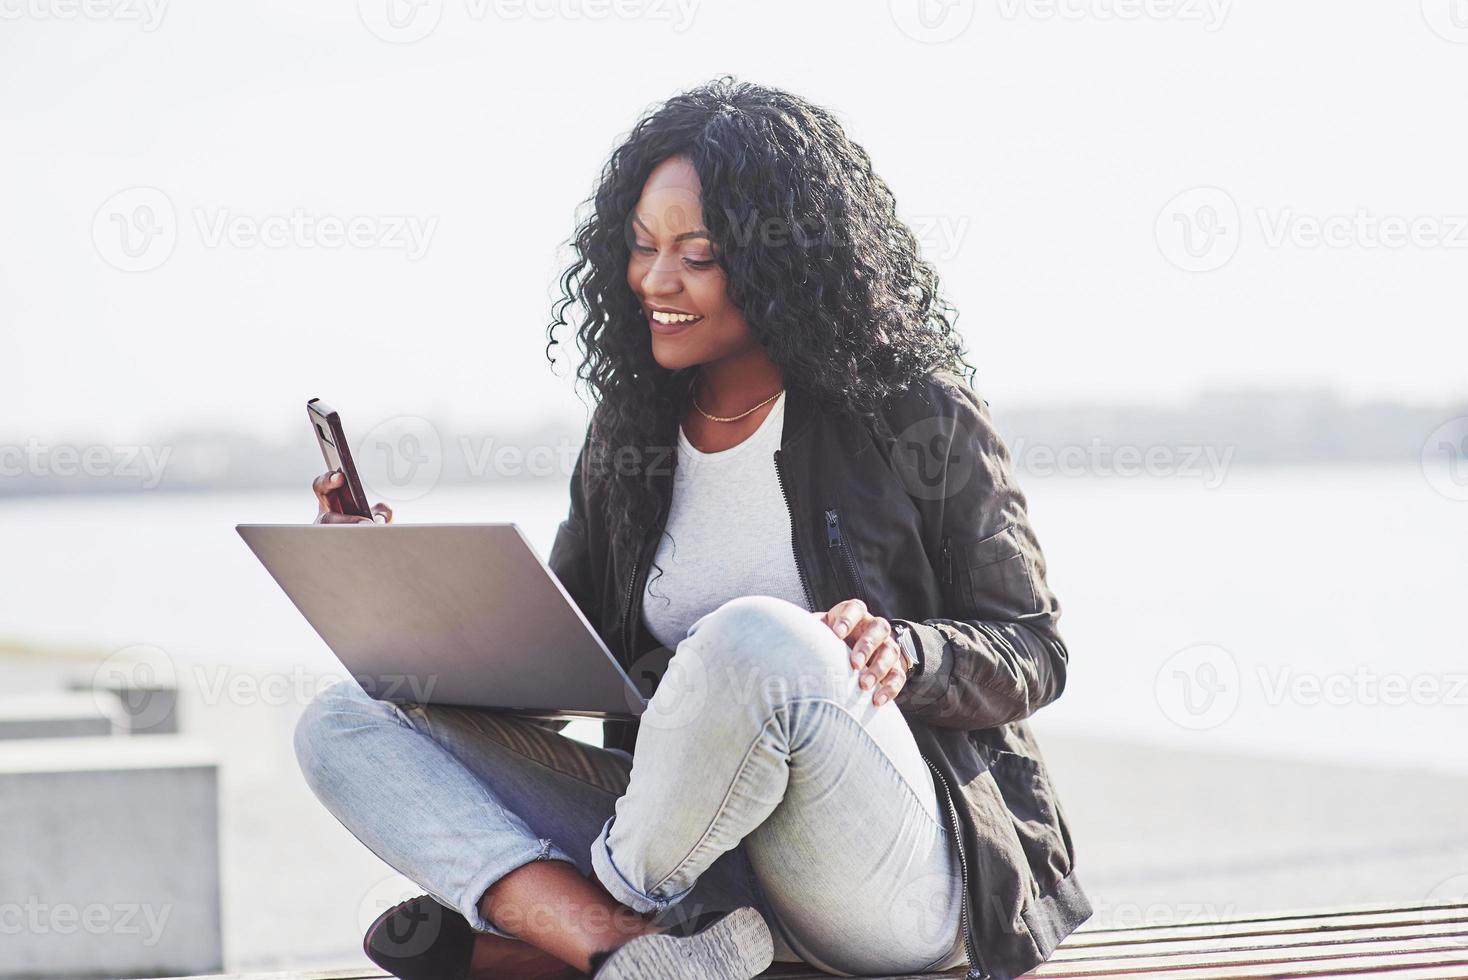 jonge vrouw op straat die aan laptop werkt en op mobiele telefoon praat foto